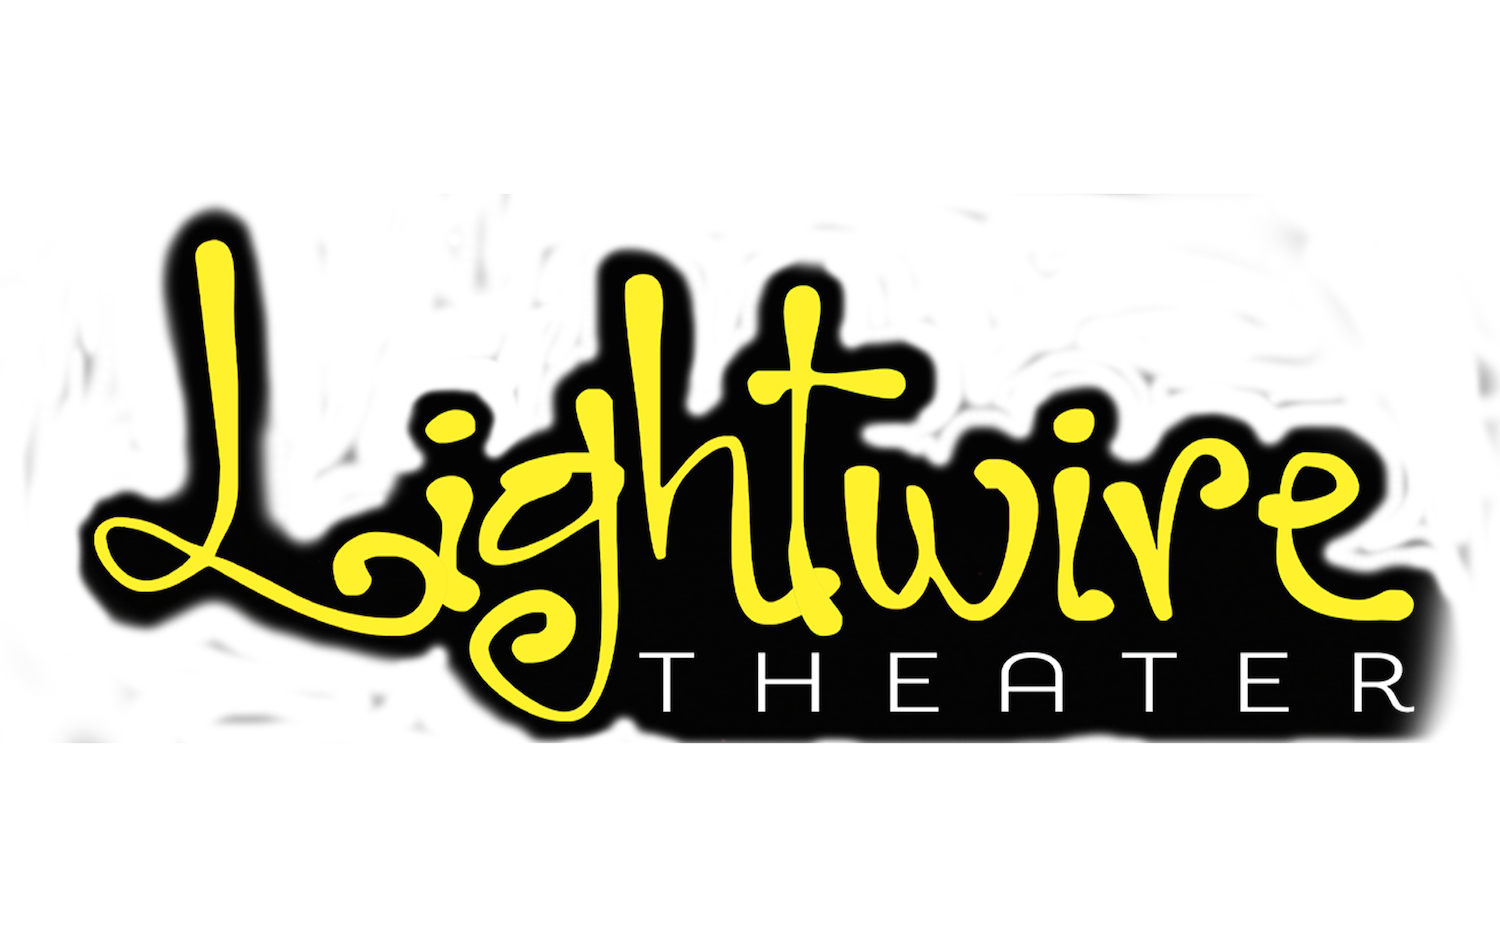 Lightwire Theater